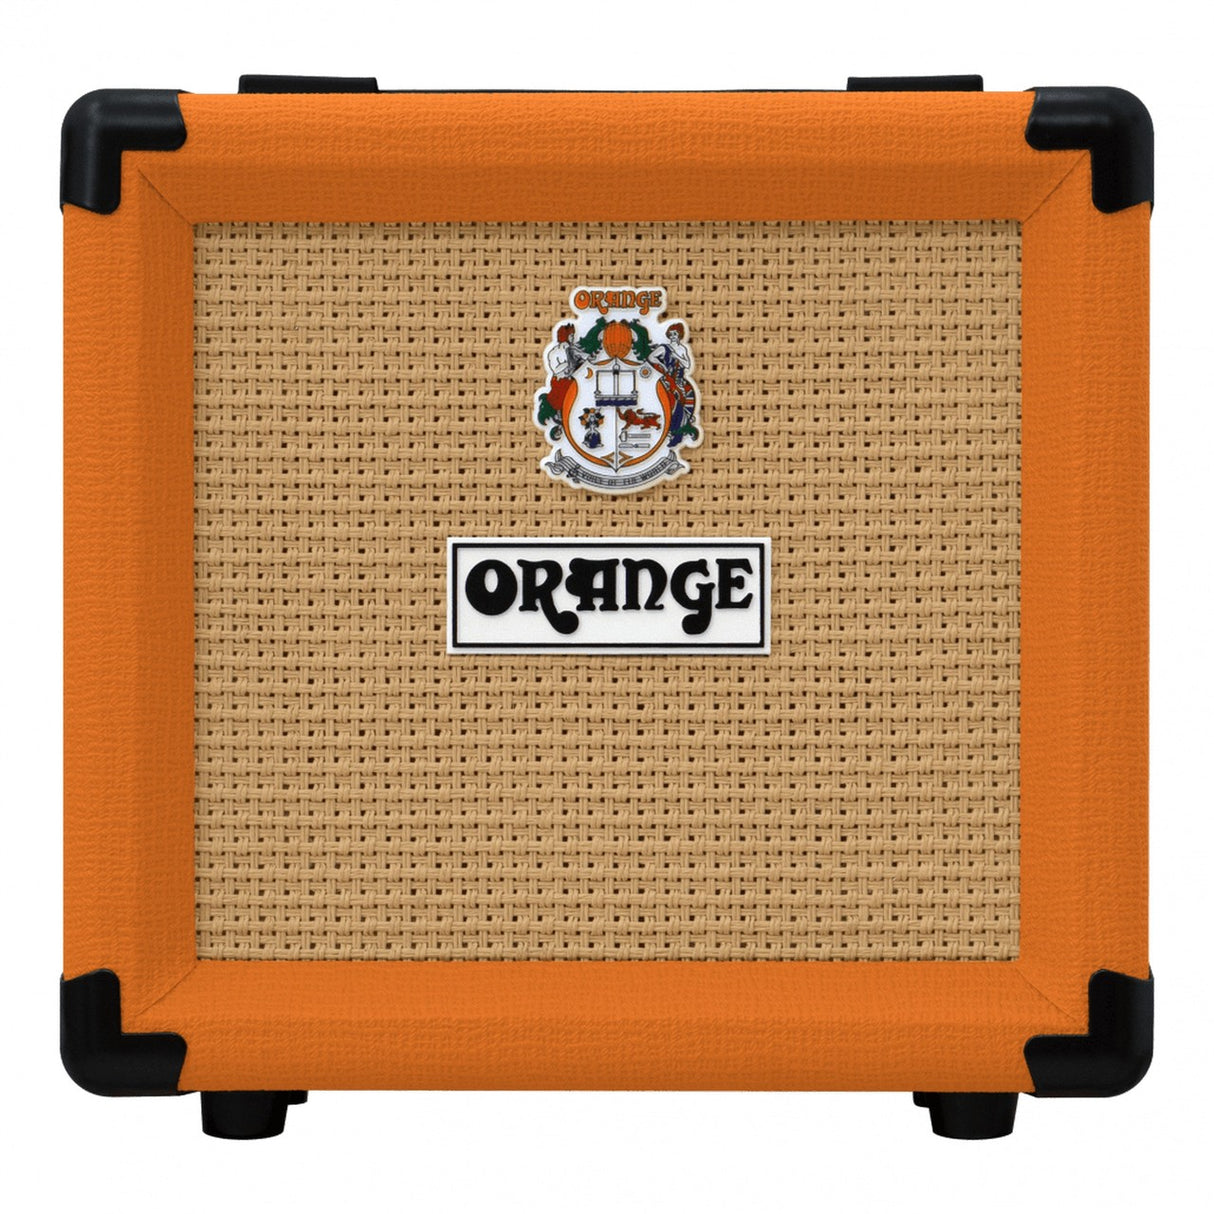 Orange PPC108 | 1 x 8 Closed Back 20 Watt Guitar Speaker Cabinet